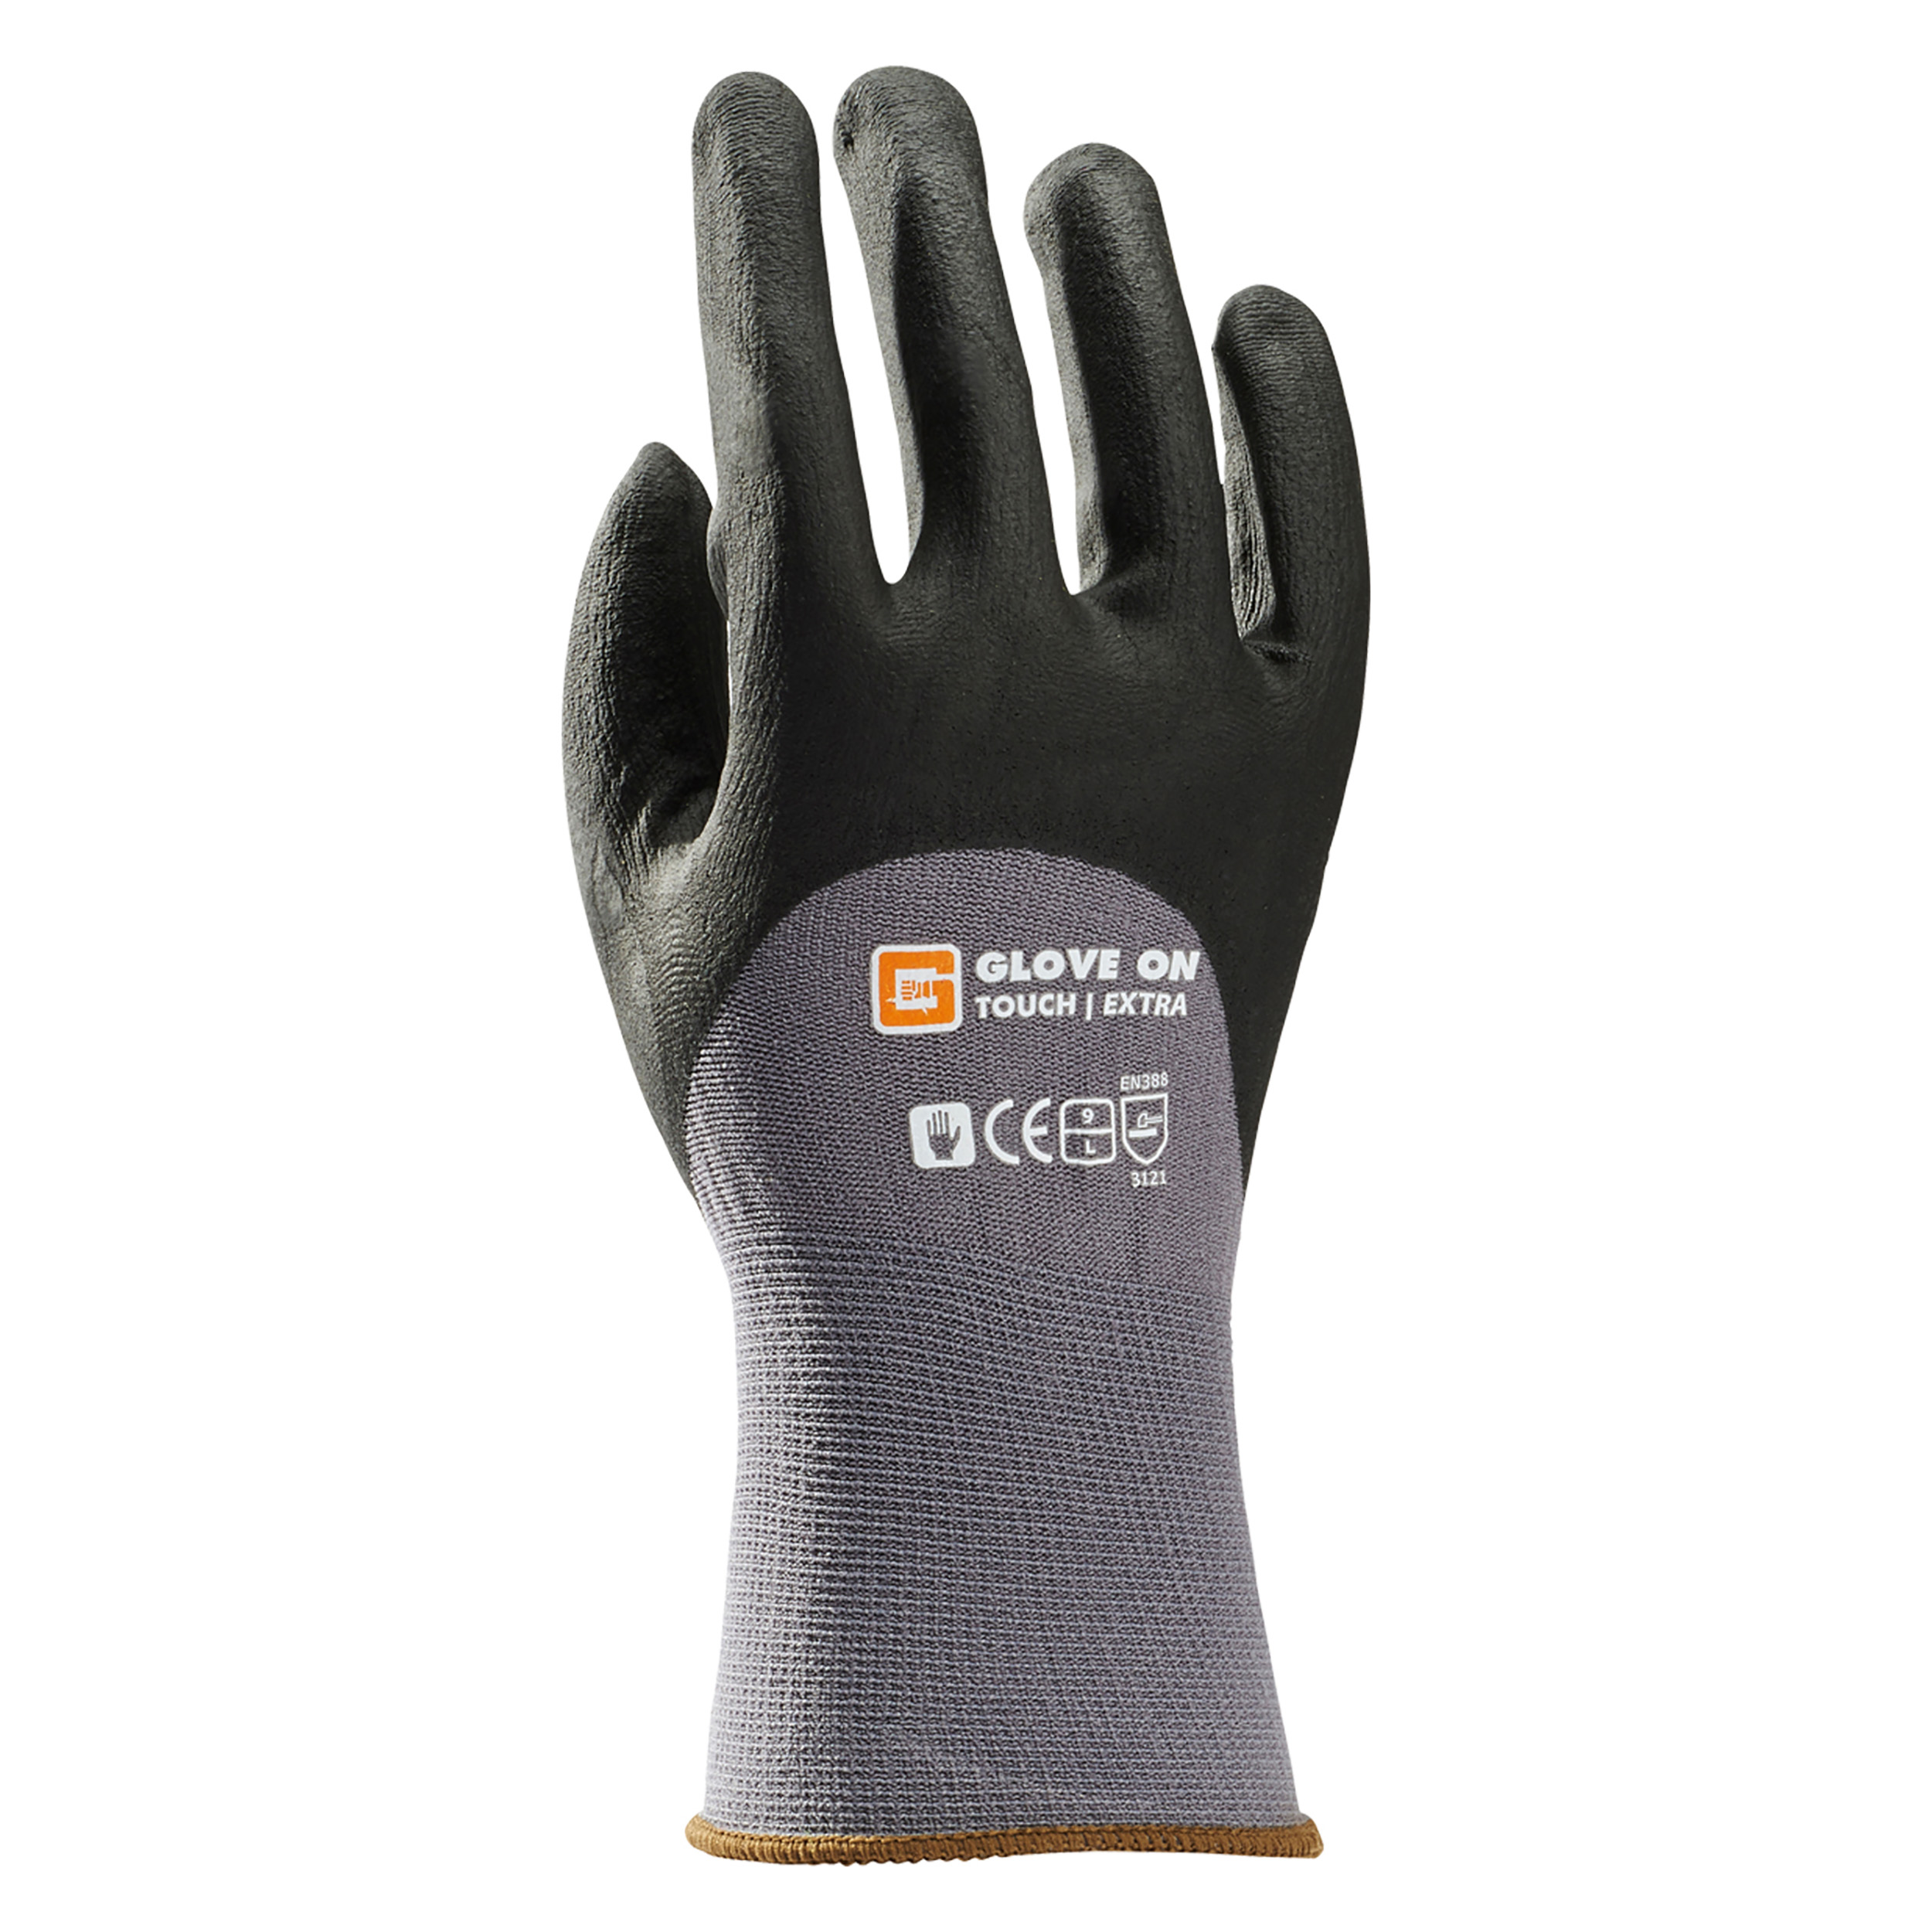 21.080.22 Glove On Touch werkhandschoen touch extra - XL